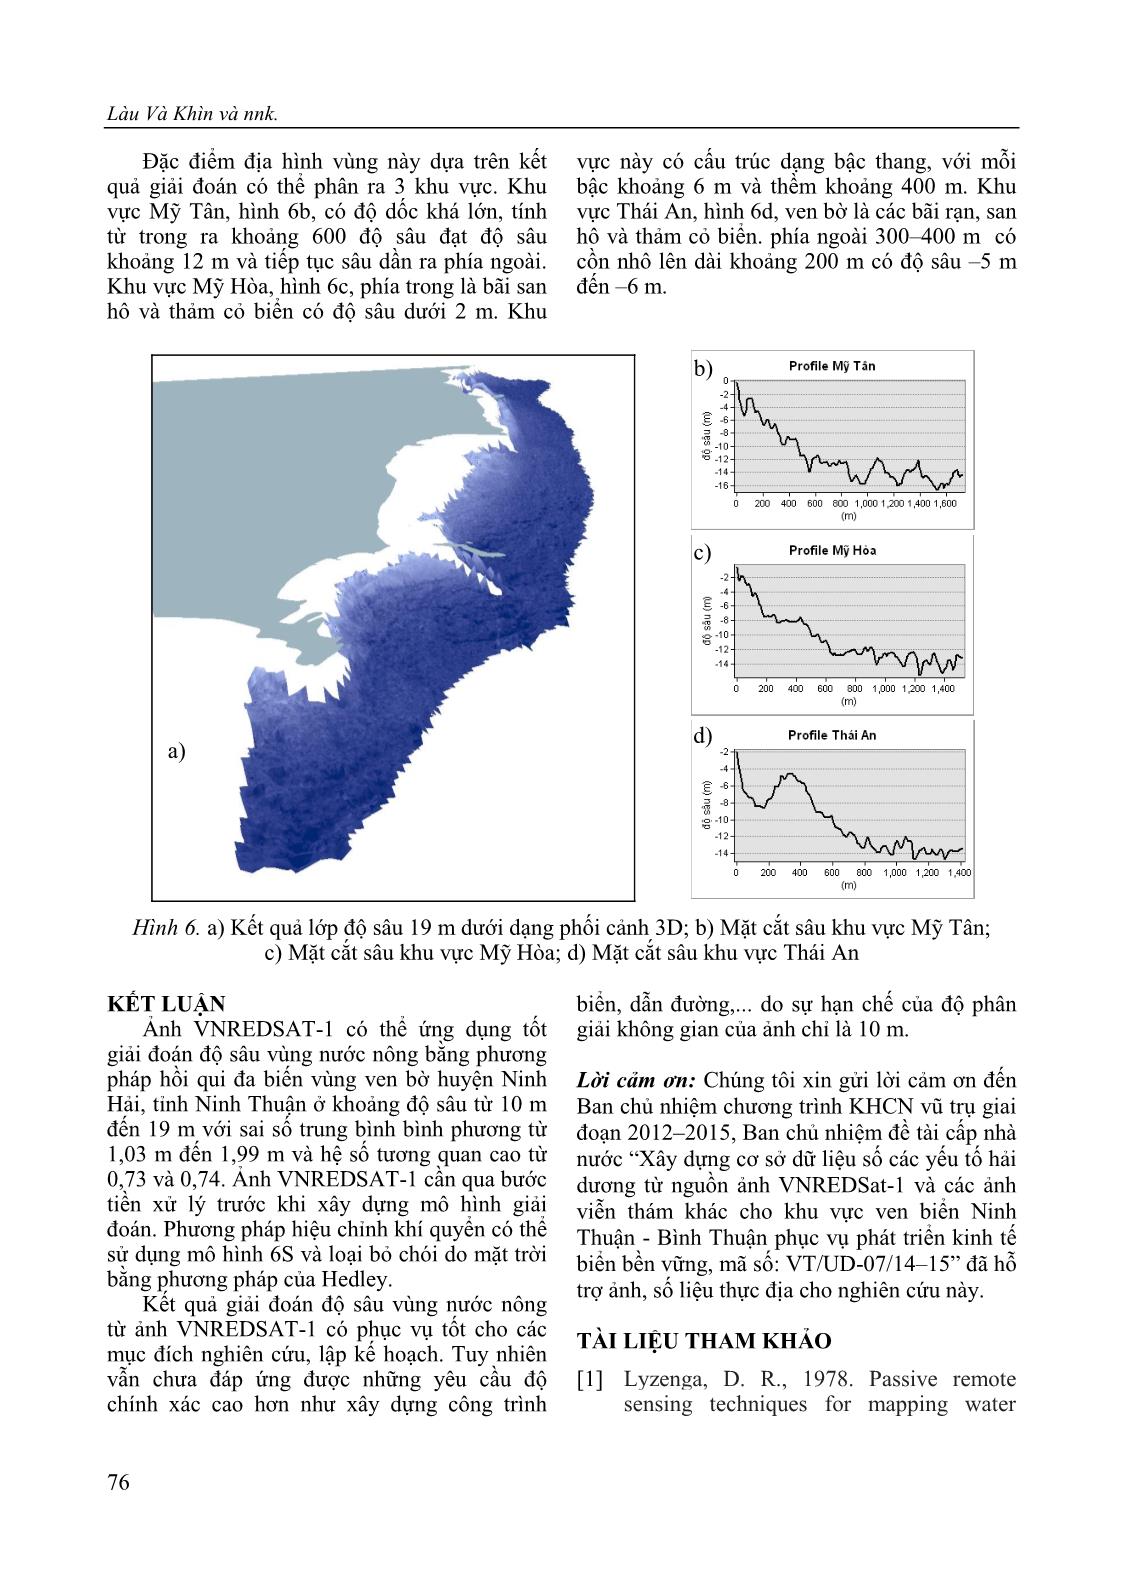 Bathymetry mapping using VNREDSAT-1 image: A case study in Ninh Hai coast, Ninh Thuan province of Vietnam trang 10